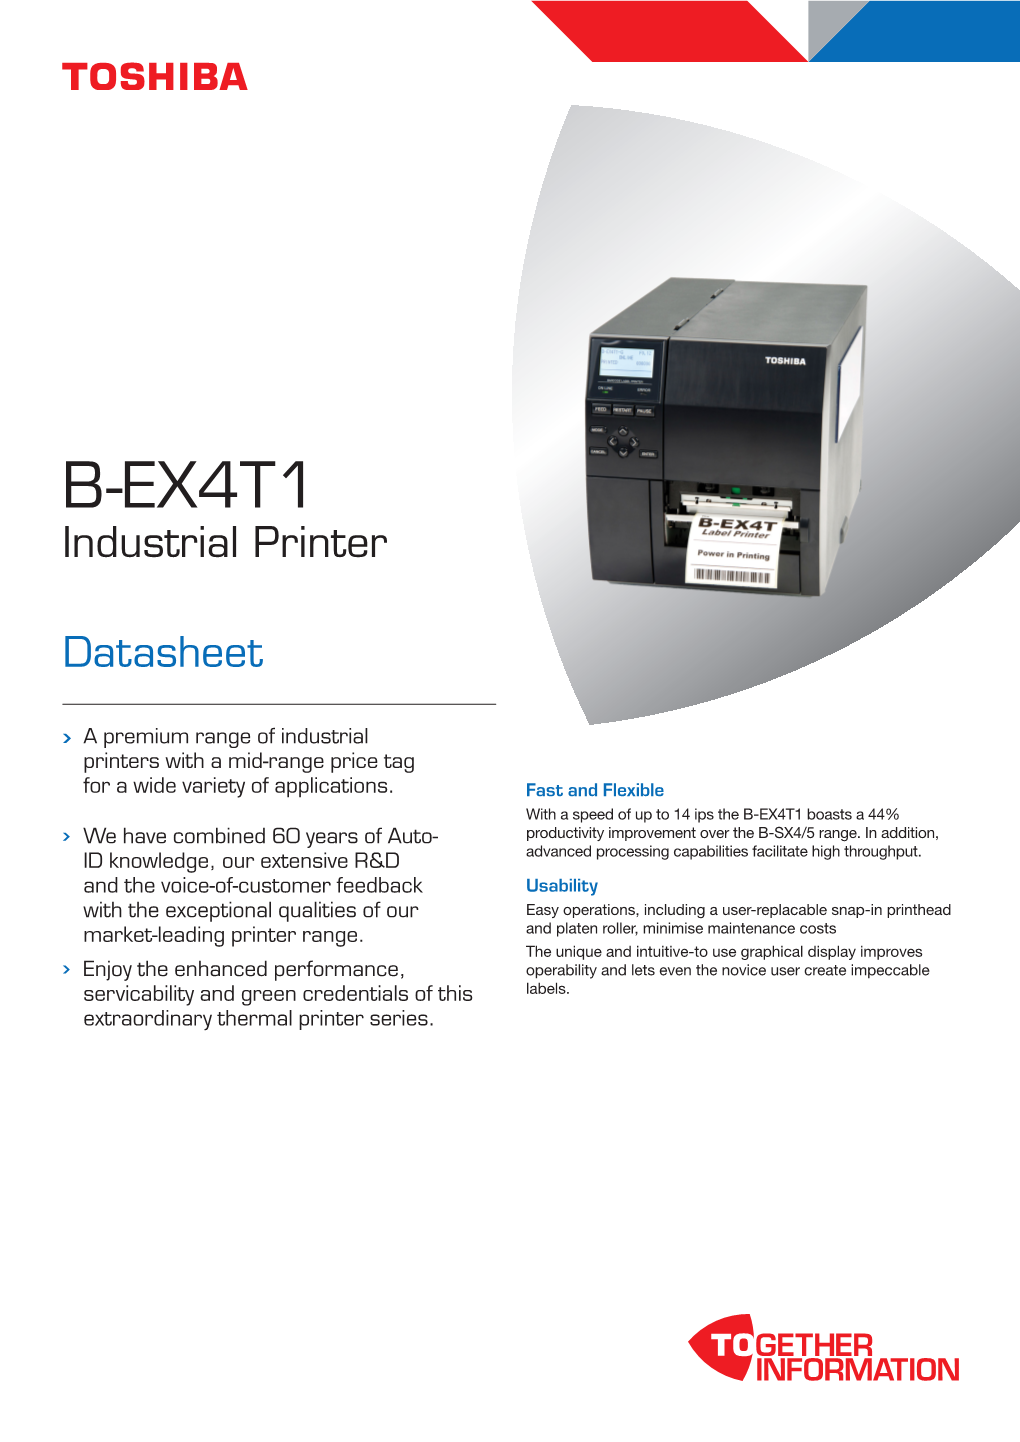 B-EX4T1 Industrial Printer